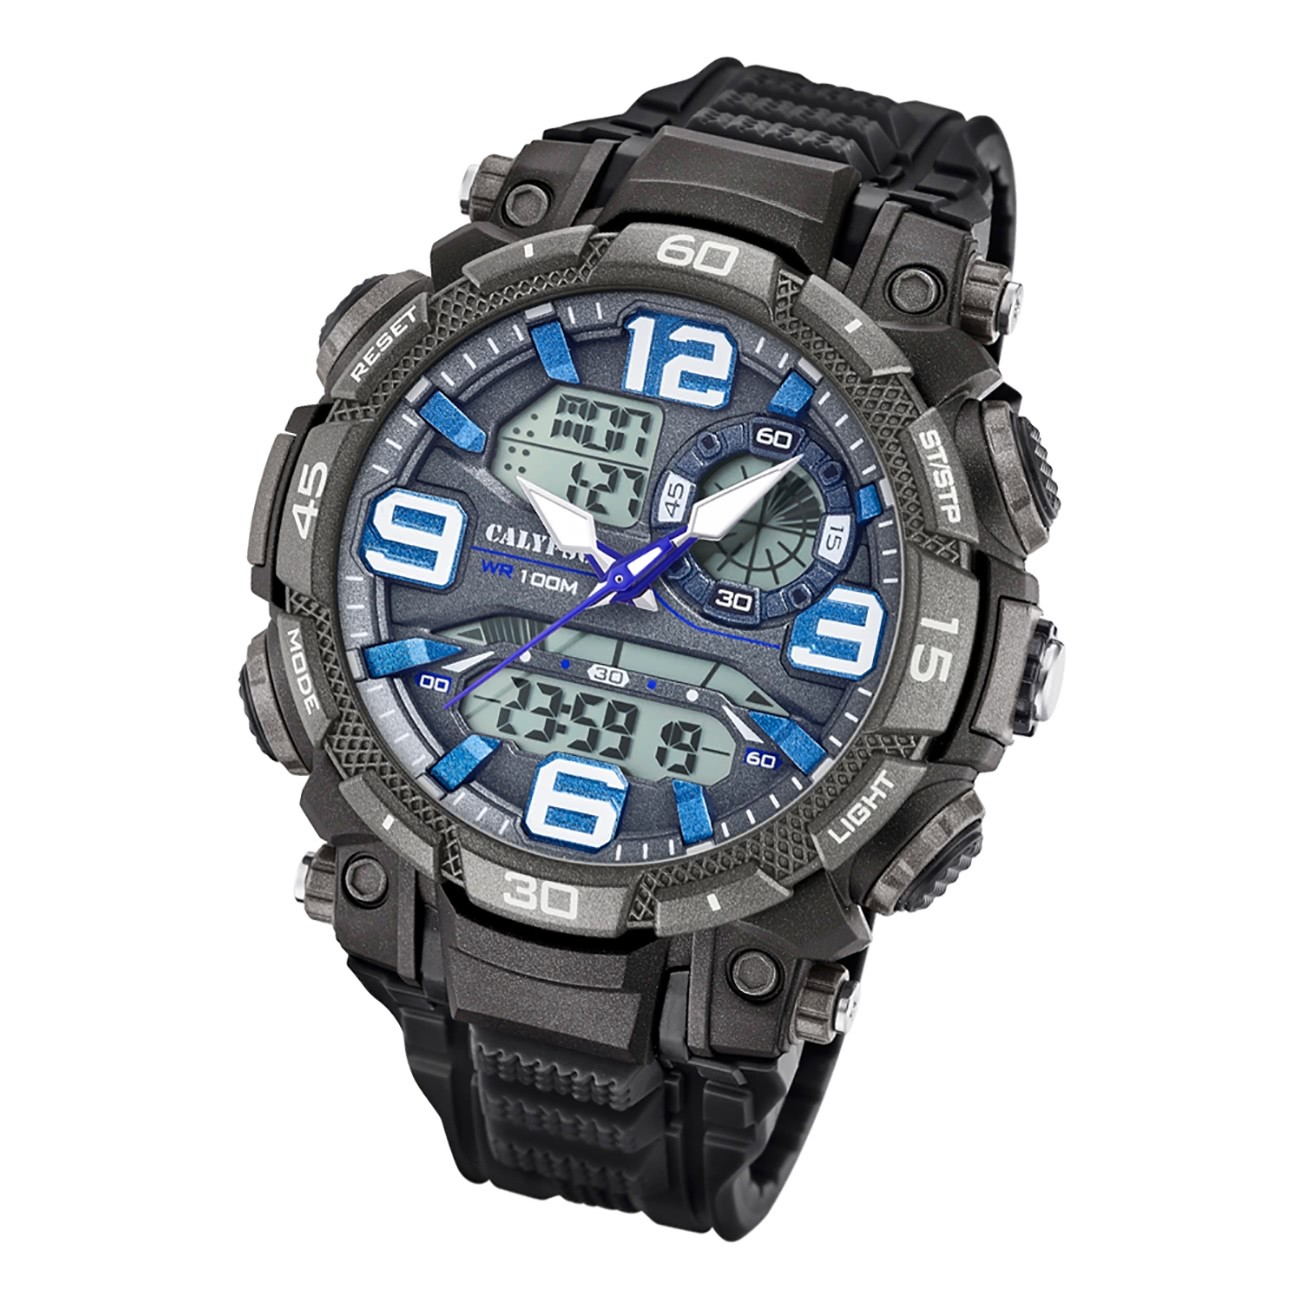 Calypso Herren Armbanduhr K5793/2 Analog-Digital Kunststoff schwarz UK5793/2